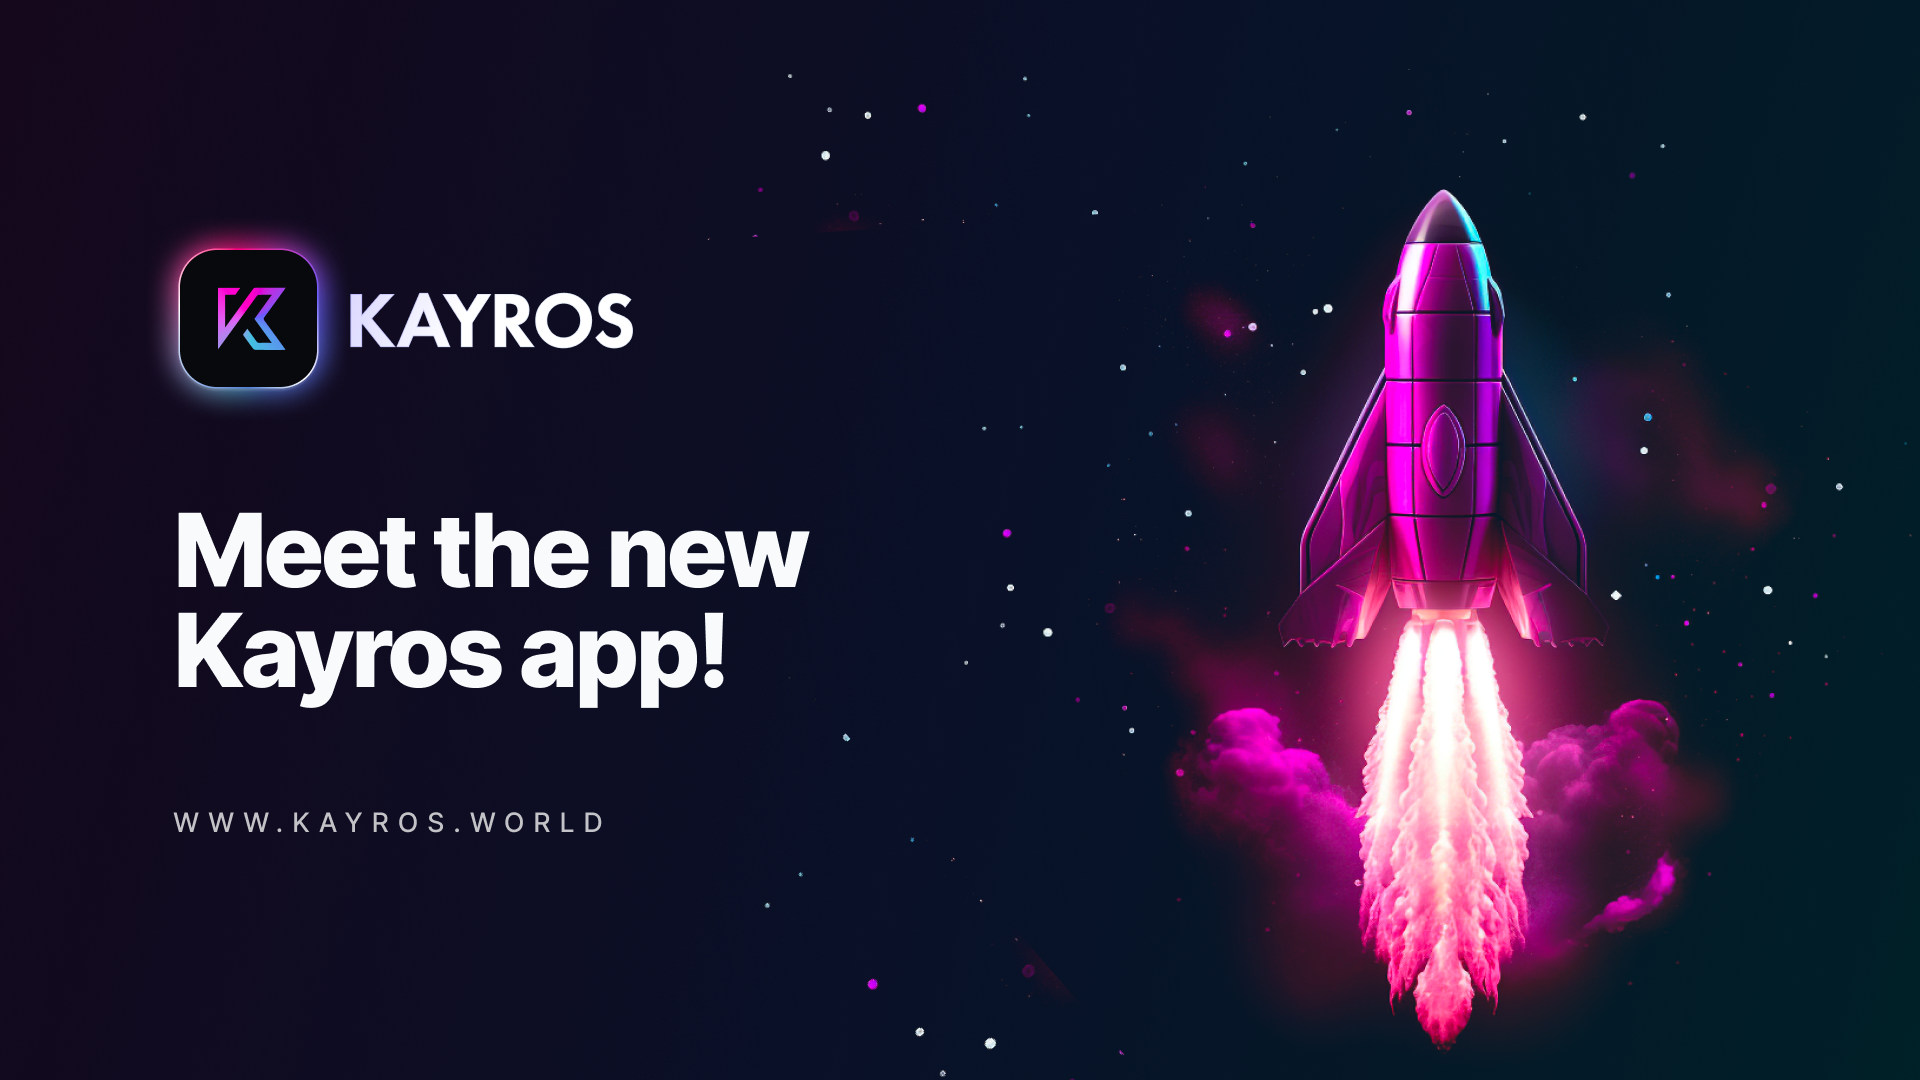 Meet the new Kayros app!